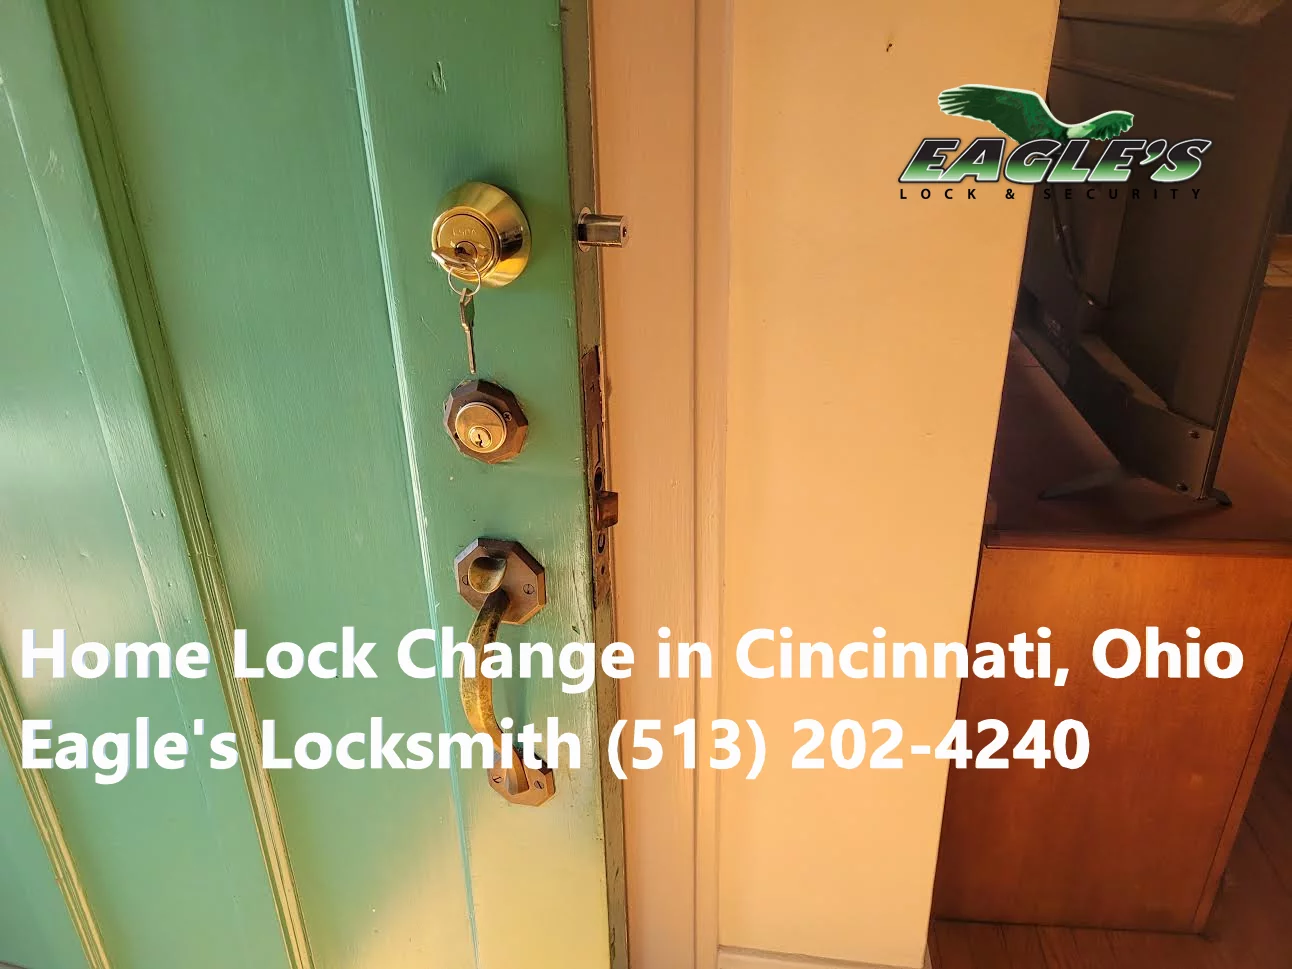 Home Lock Change in Cincinnati, Ohio